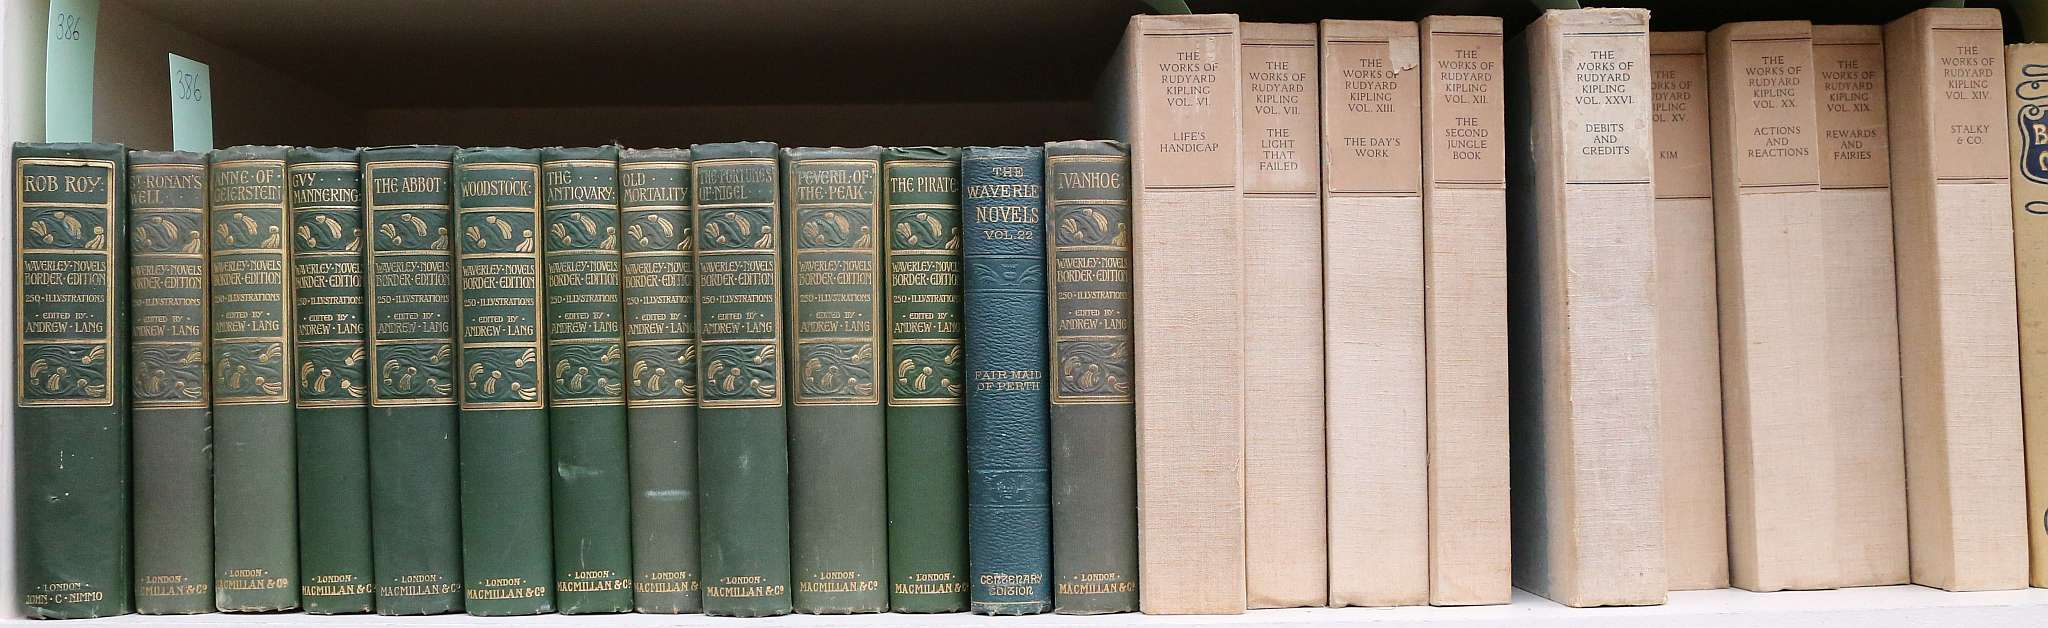 KIPLING, Rudyard. The Bombay edition of the works of Rudyard Kipling. London, Macmillan and Co.,